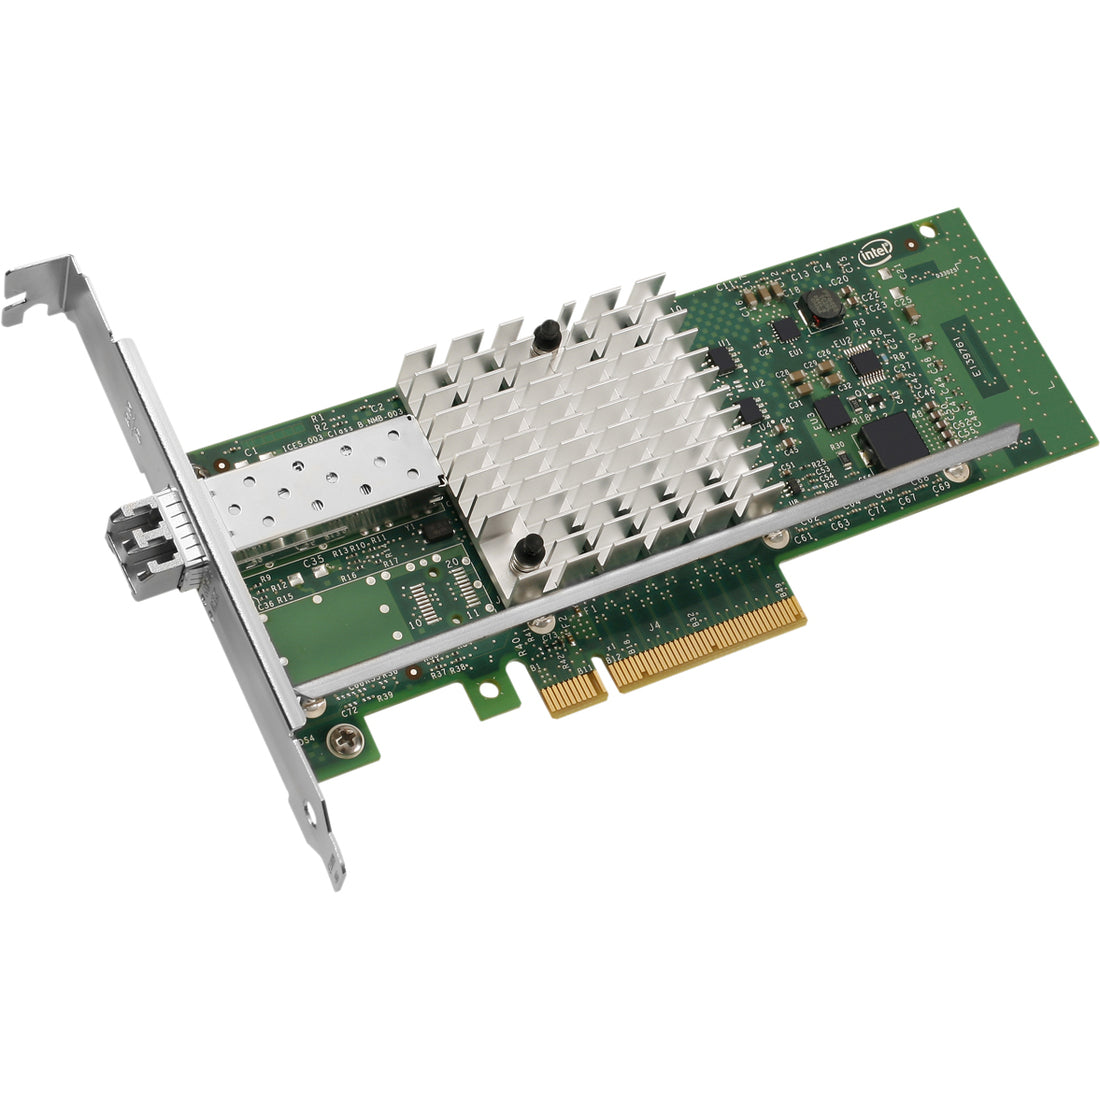 Accortec Ethernet 10 Gigabit Converged Network Adapter X520-SR1 - E10G41BFSR-ACC